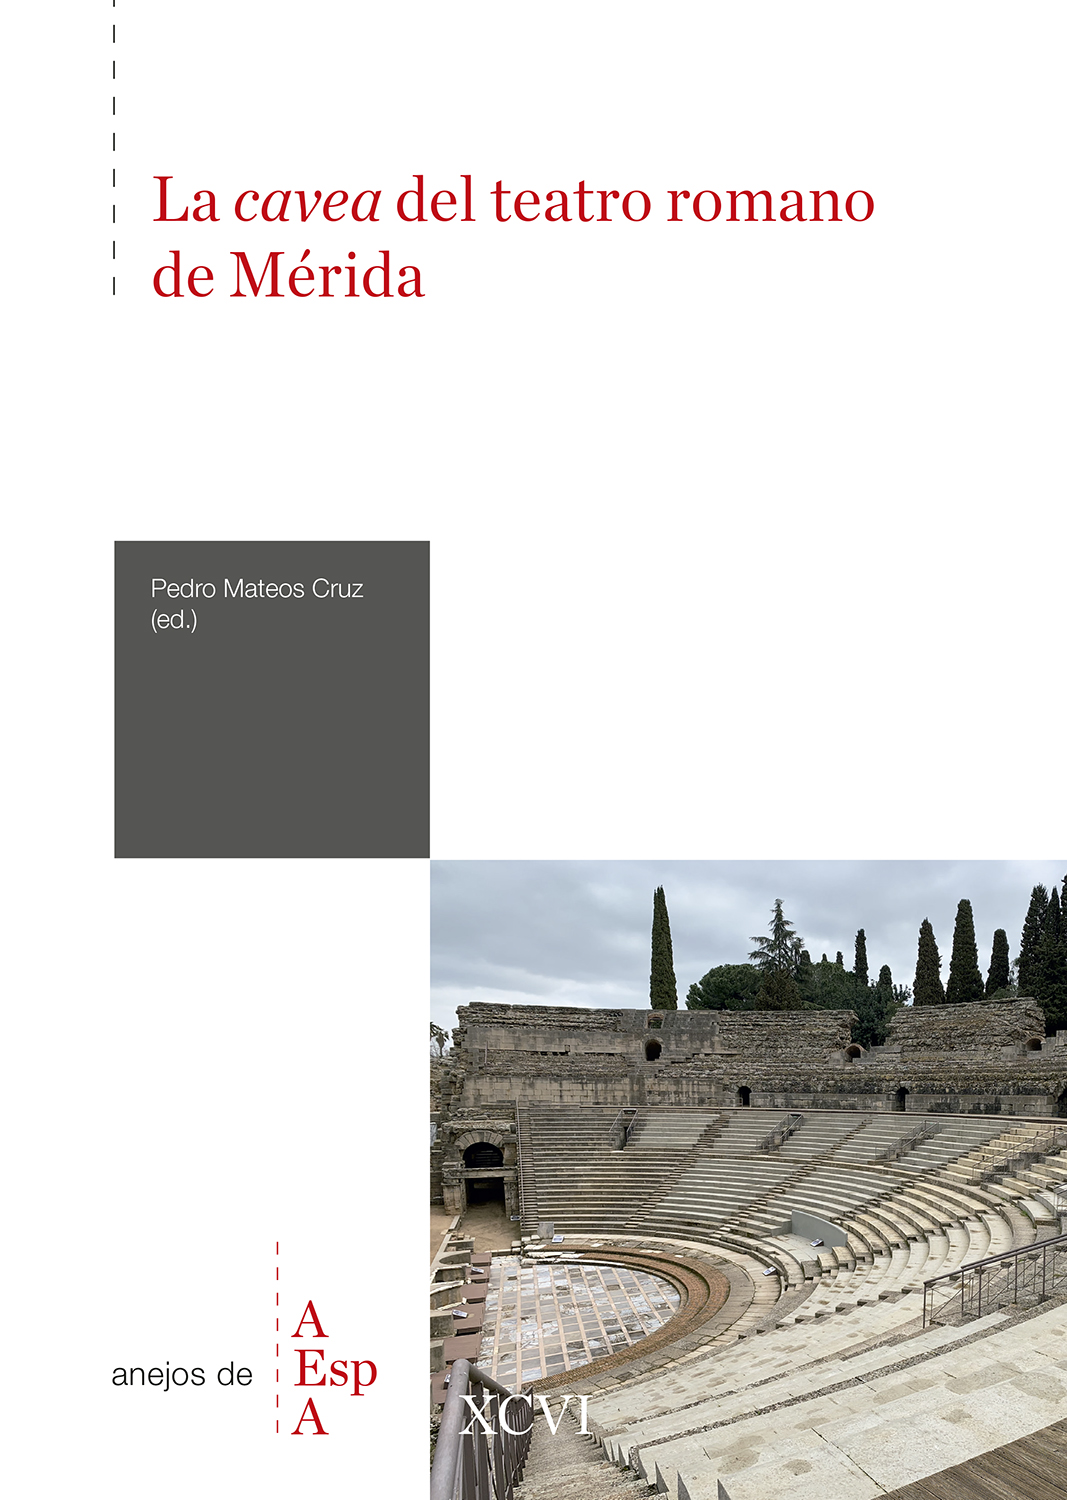 La 'cavea' del teatro romano de Mérida